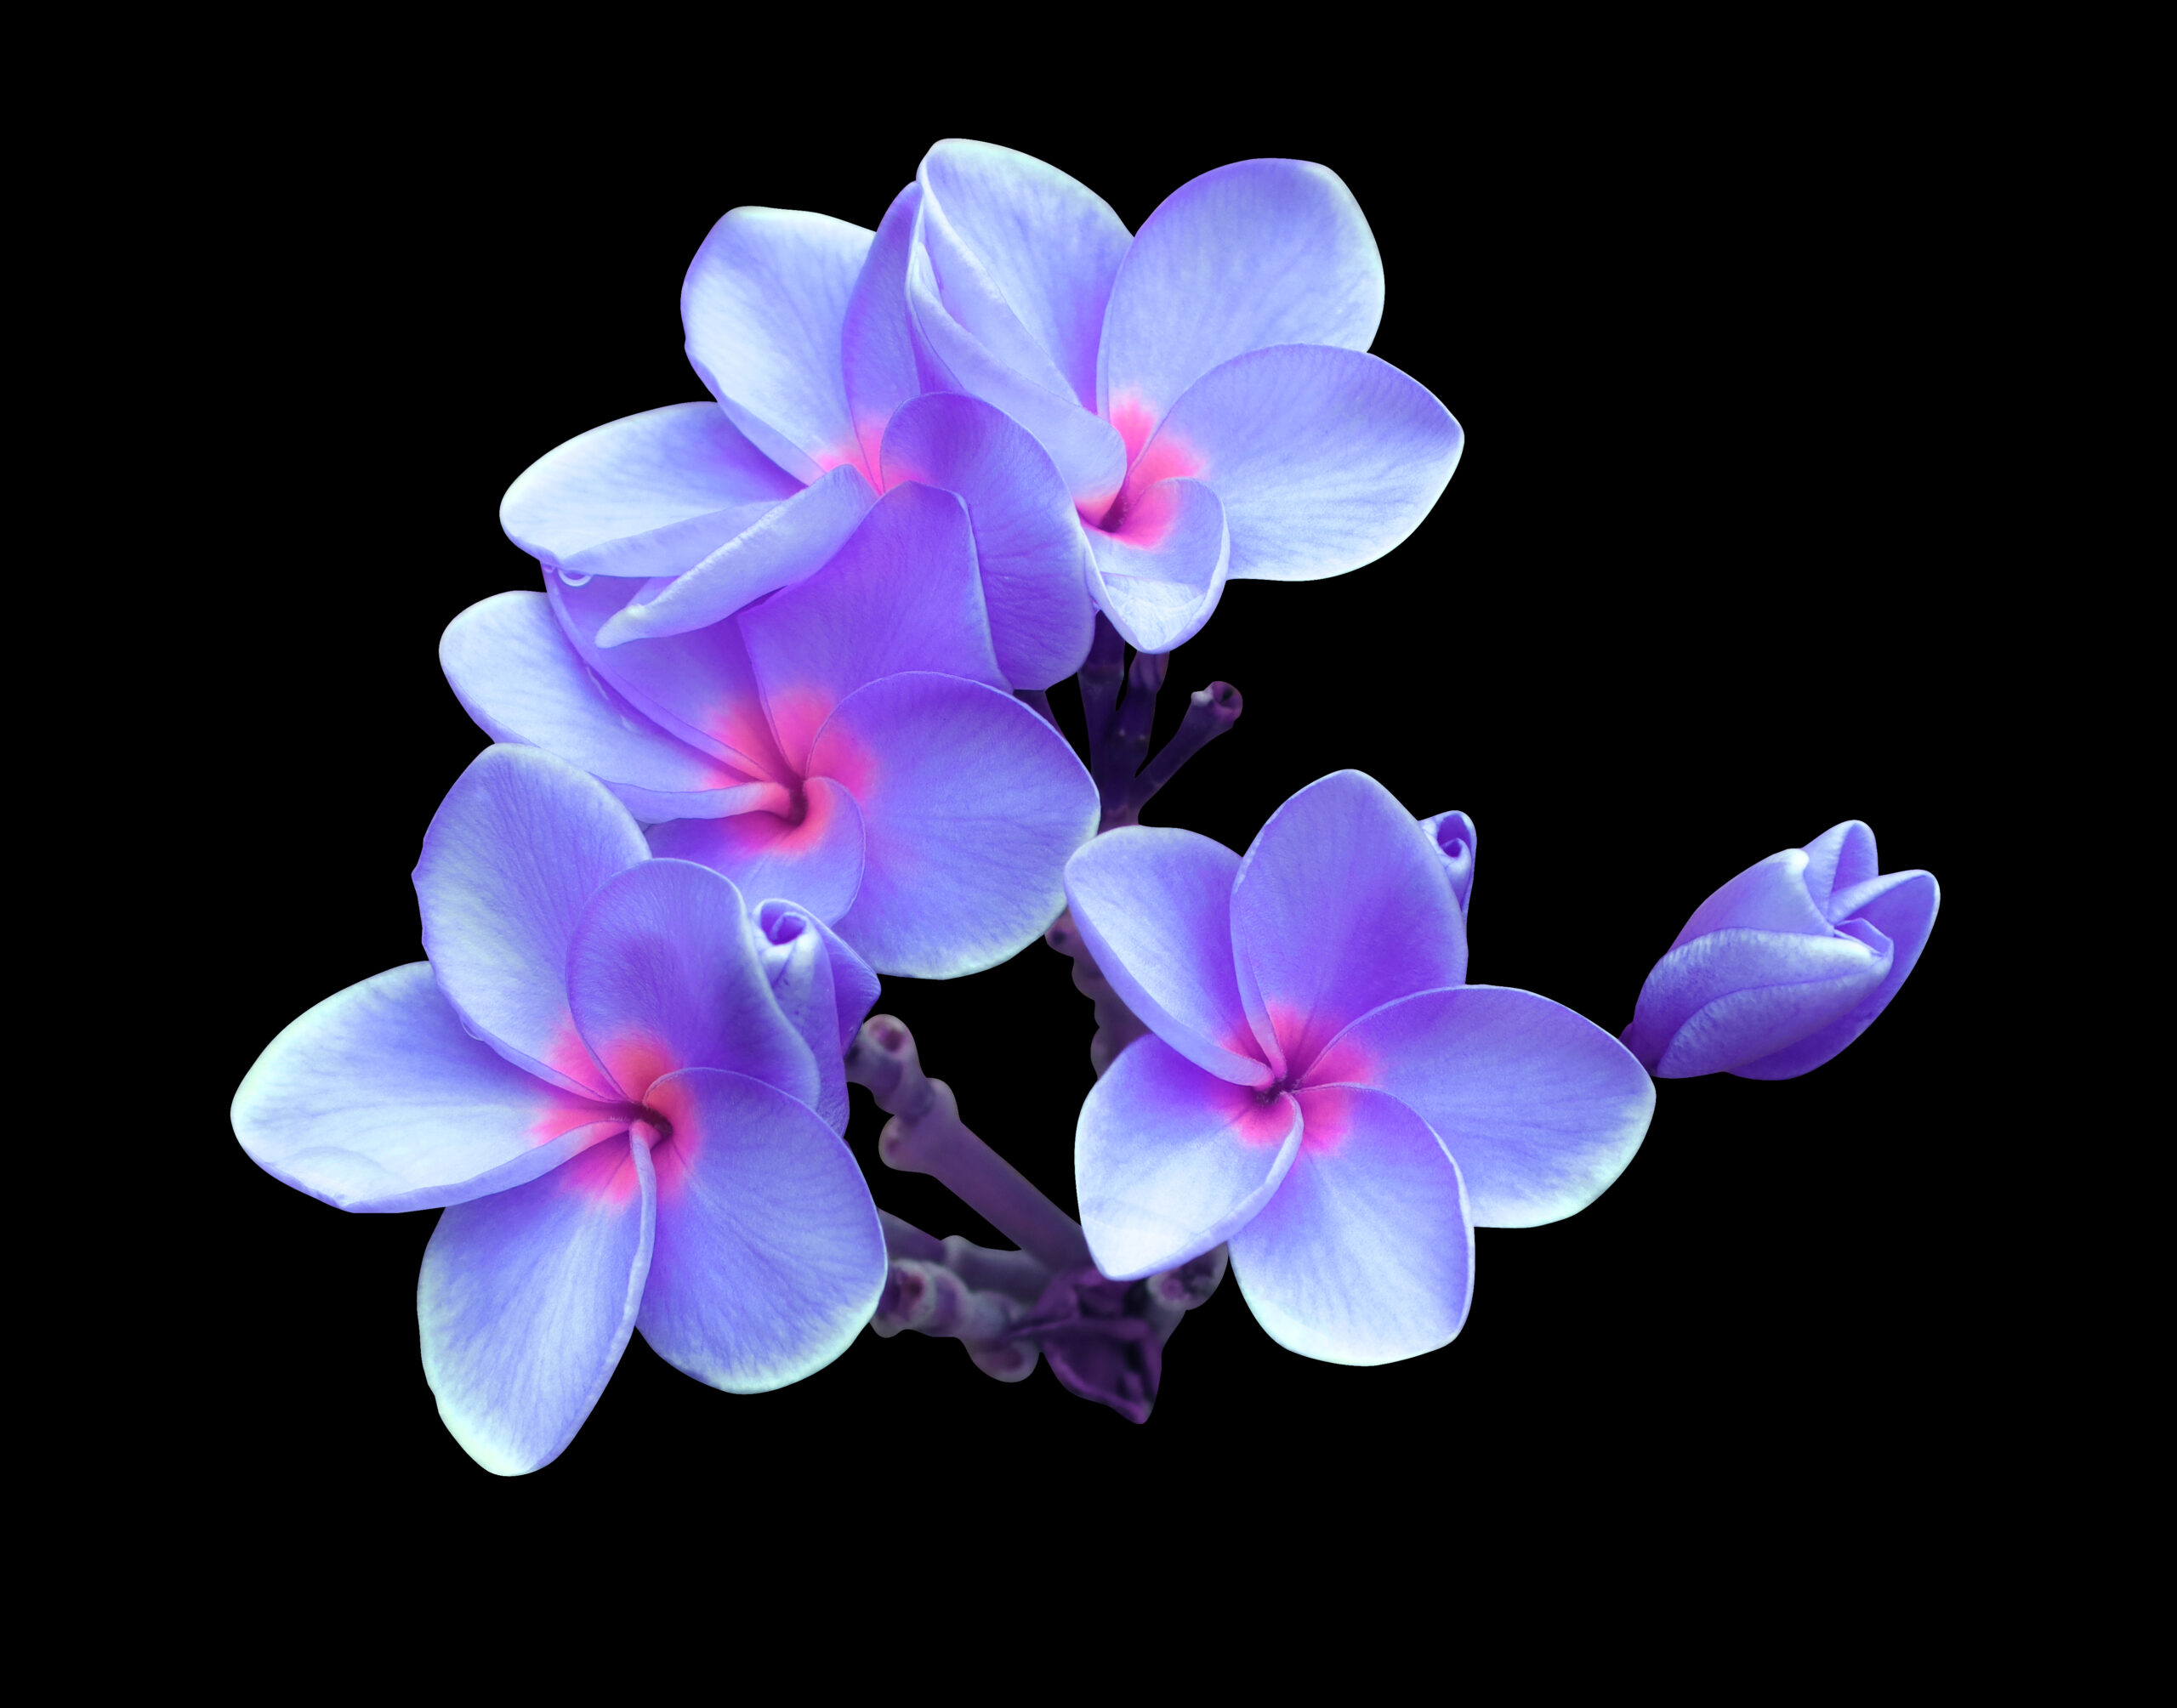 vecteezy_plumeria-or-frangipani-or-temple-tree-flower-close-up_15136667_975